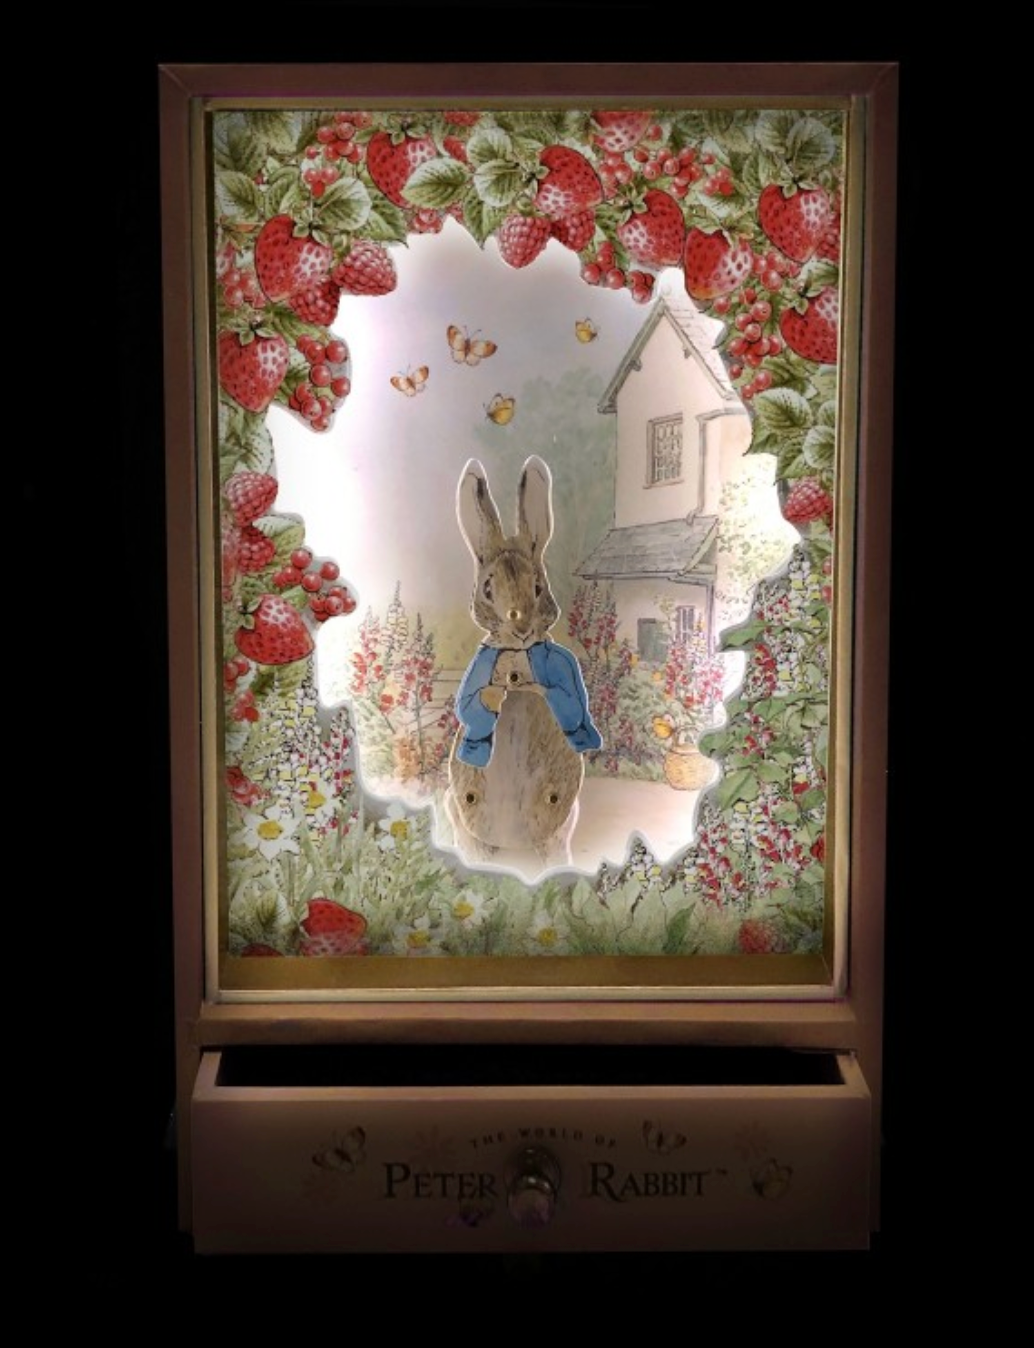 Grand dancing musical et veilleuse Peter Rabbit fraises TROUSSELIER